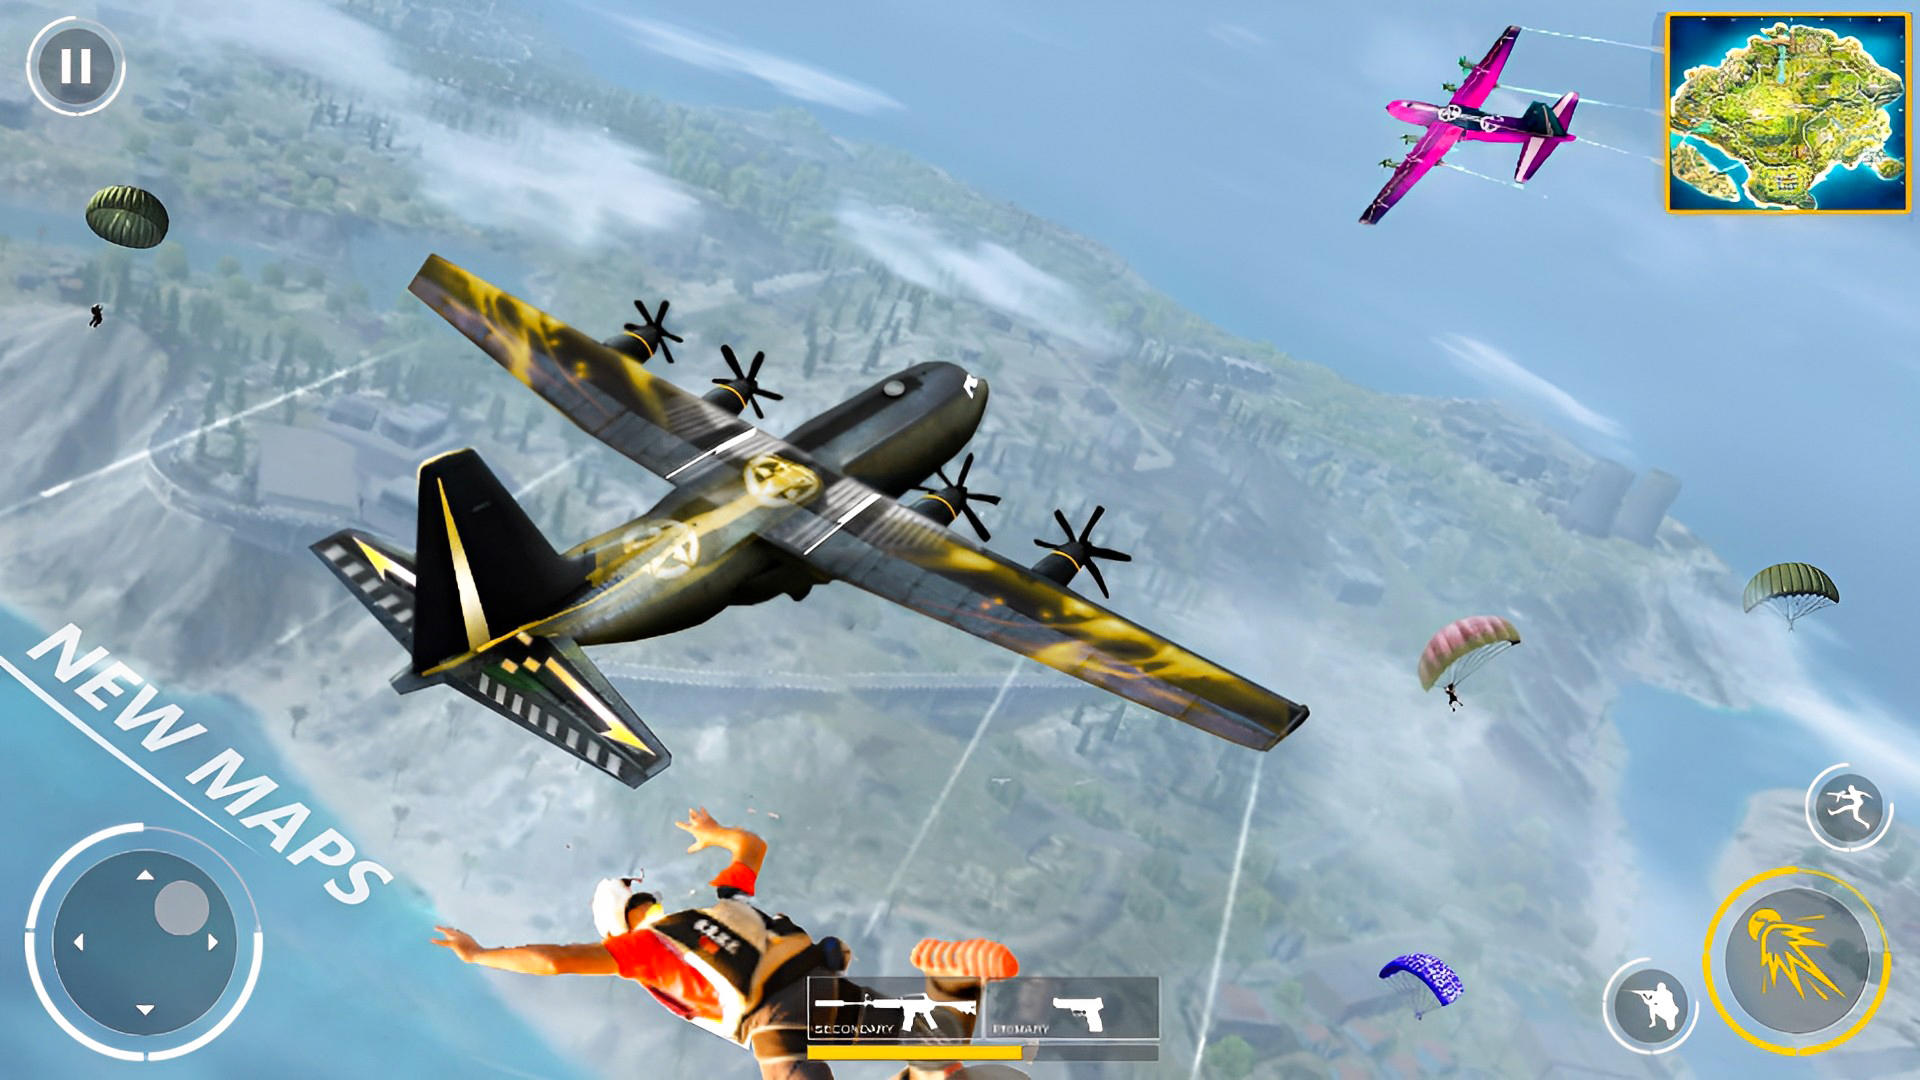 Screenshot 1 of Commando Fire オフライン FPS ゲーム 1.0